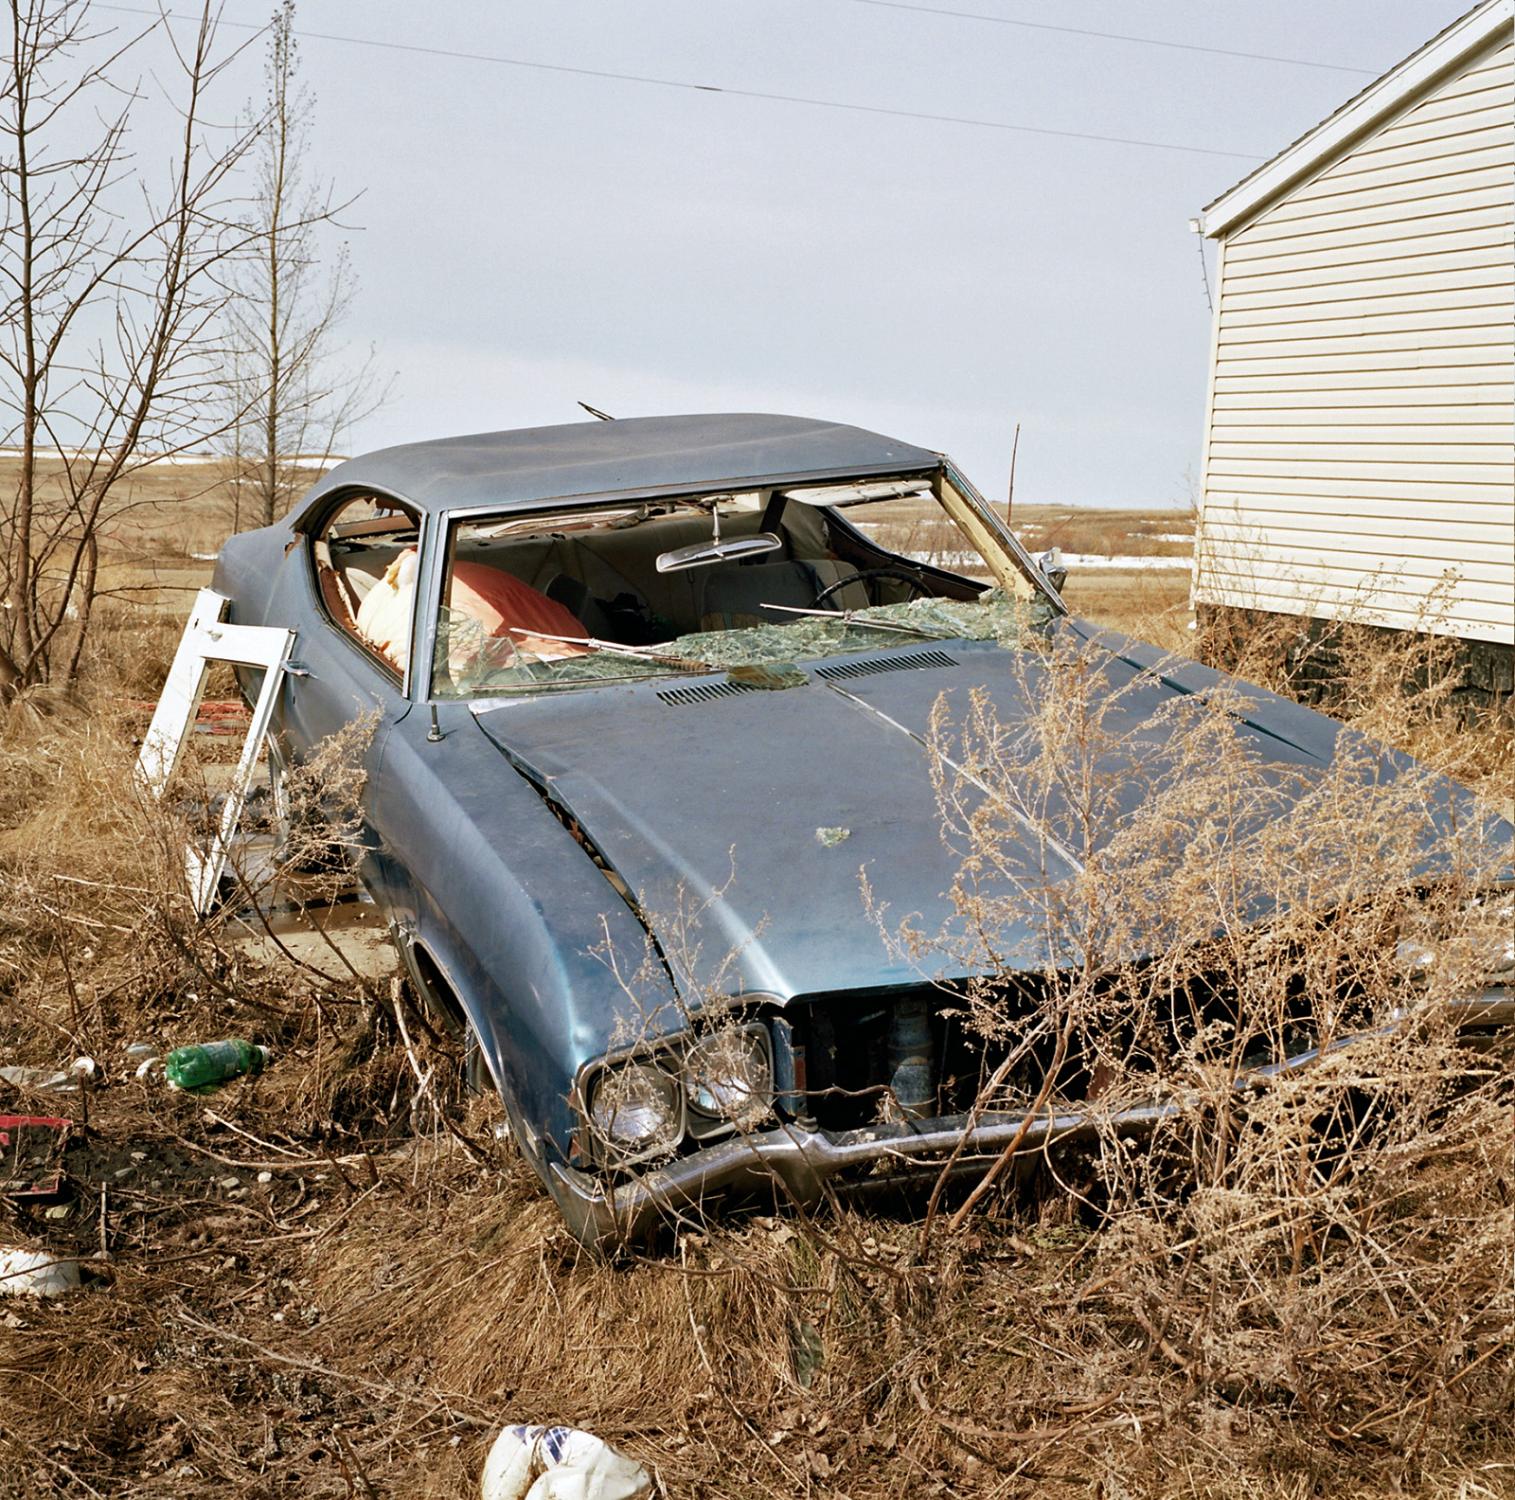 Spirit Lake - Broken discarded car near a home in St. Michaels, Spirit...